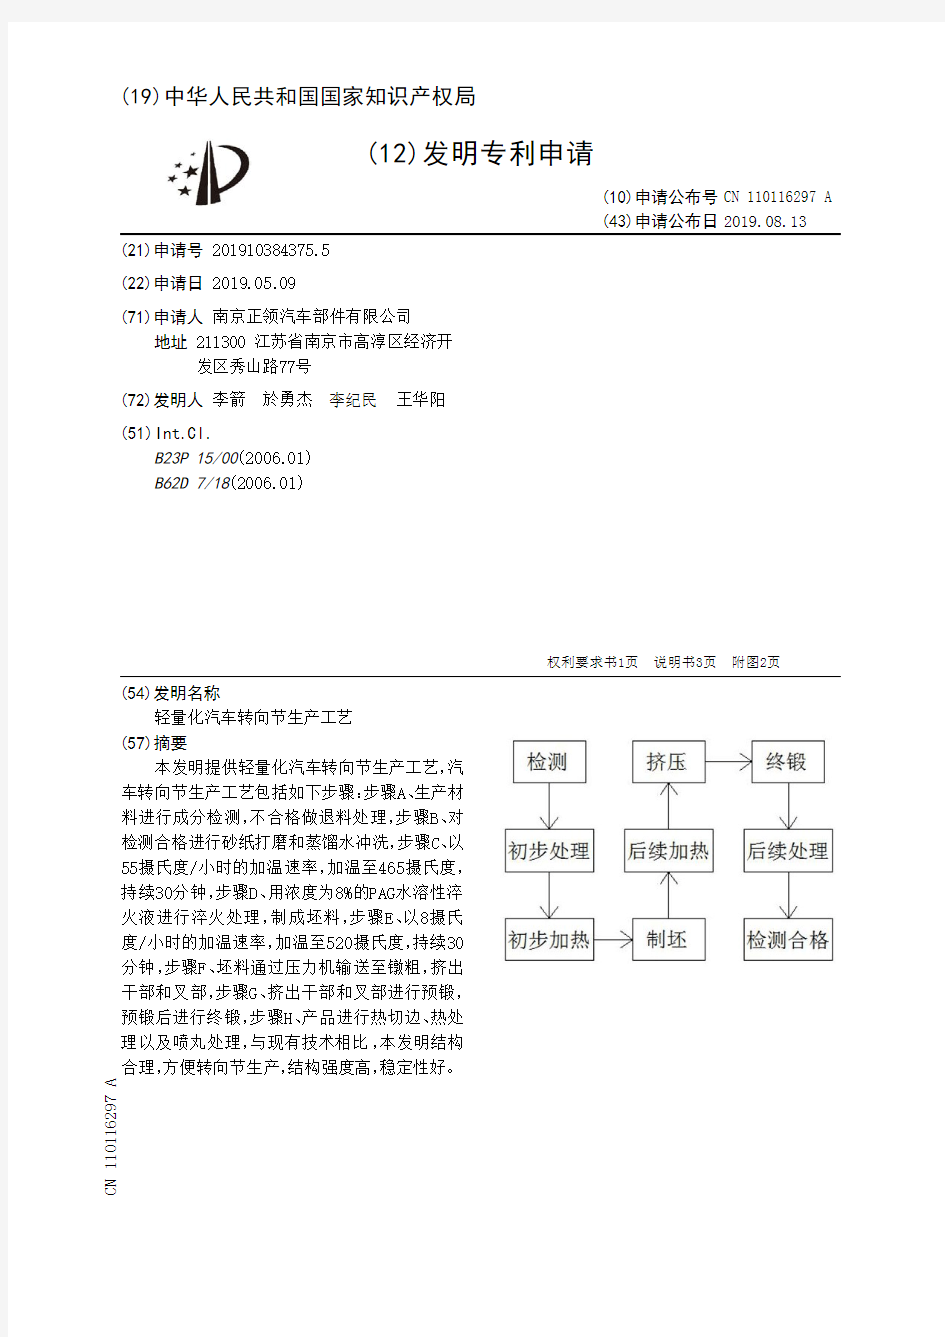 【CN110116297A】轻量化汽车转向节生产工艺【专利】